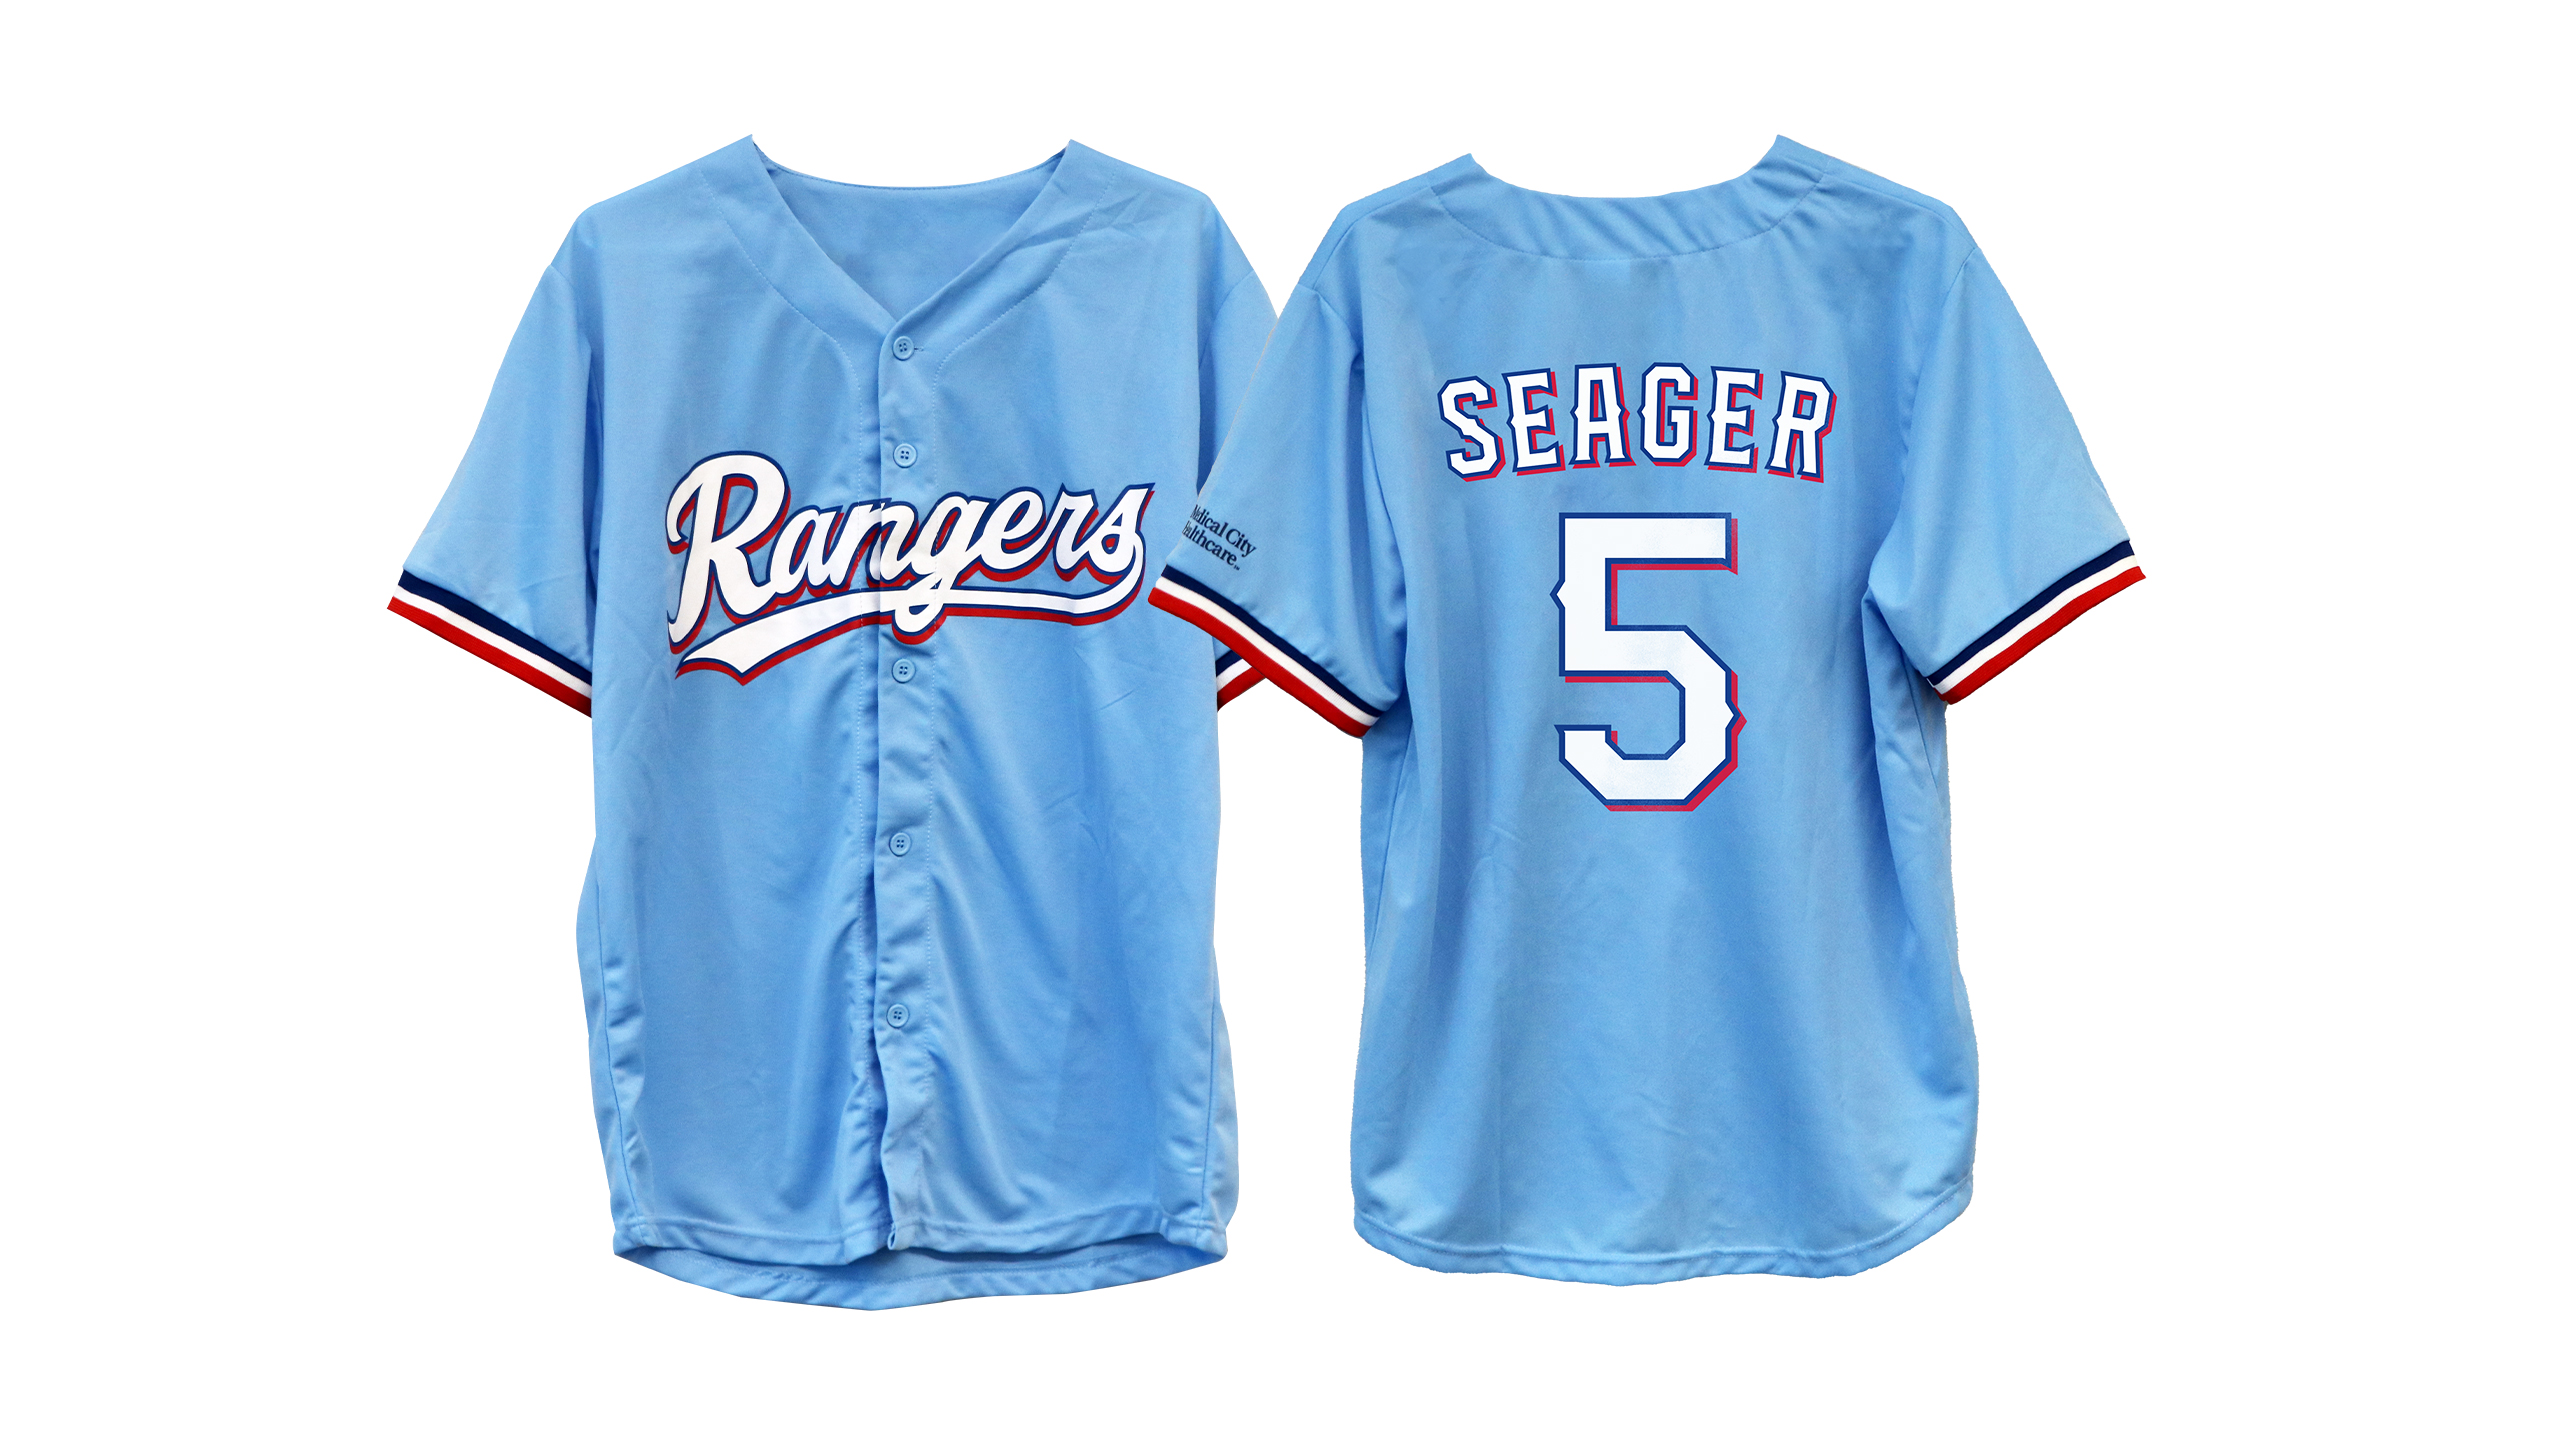 Women's Corey Seager White Texas Rangers Plus Size Replica Player